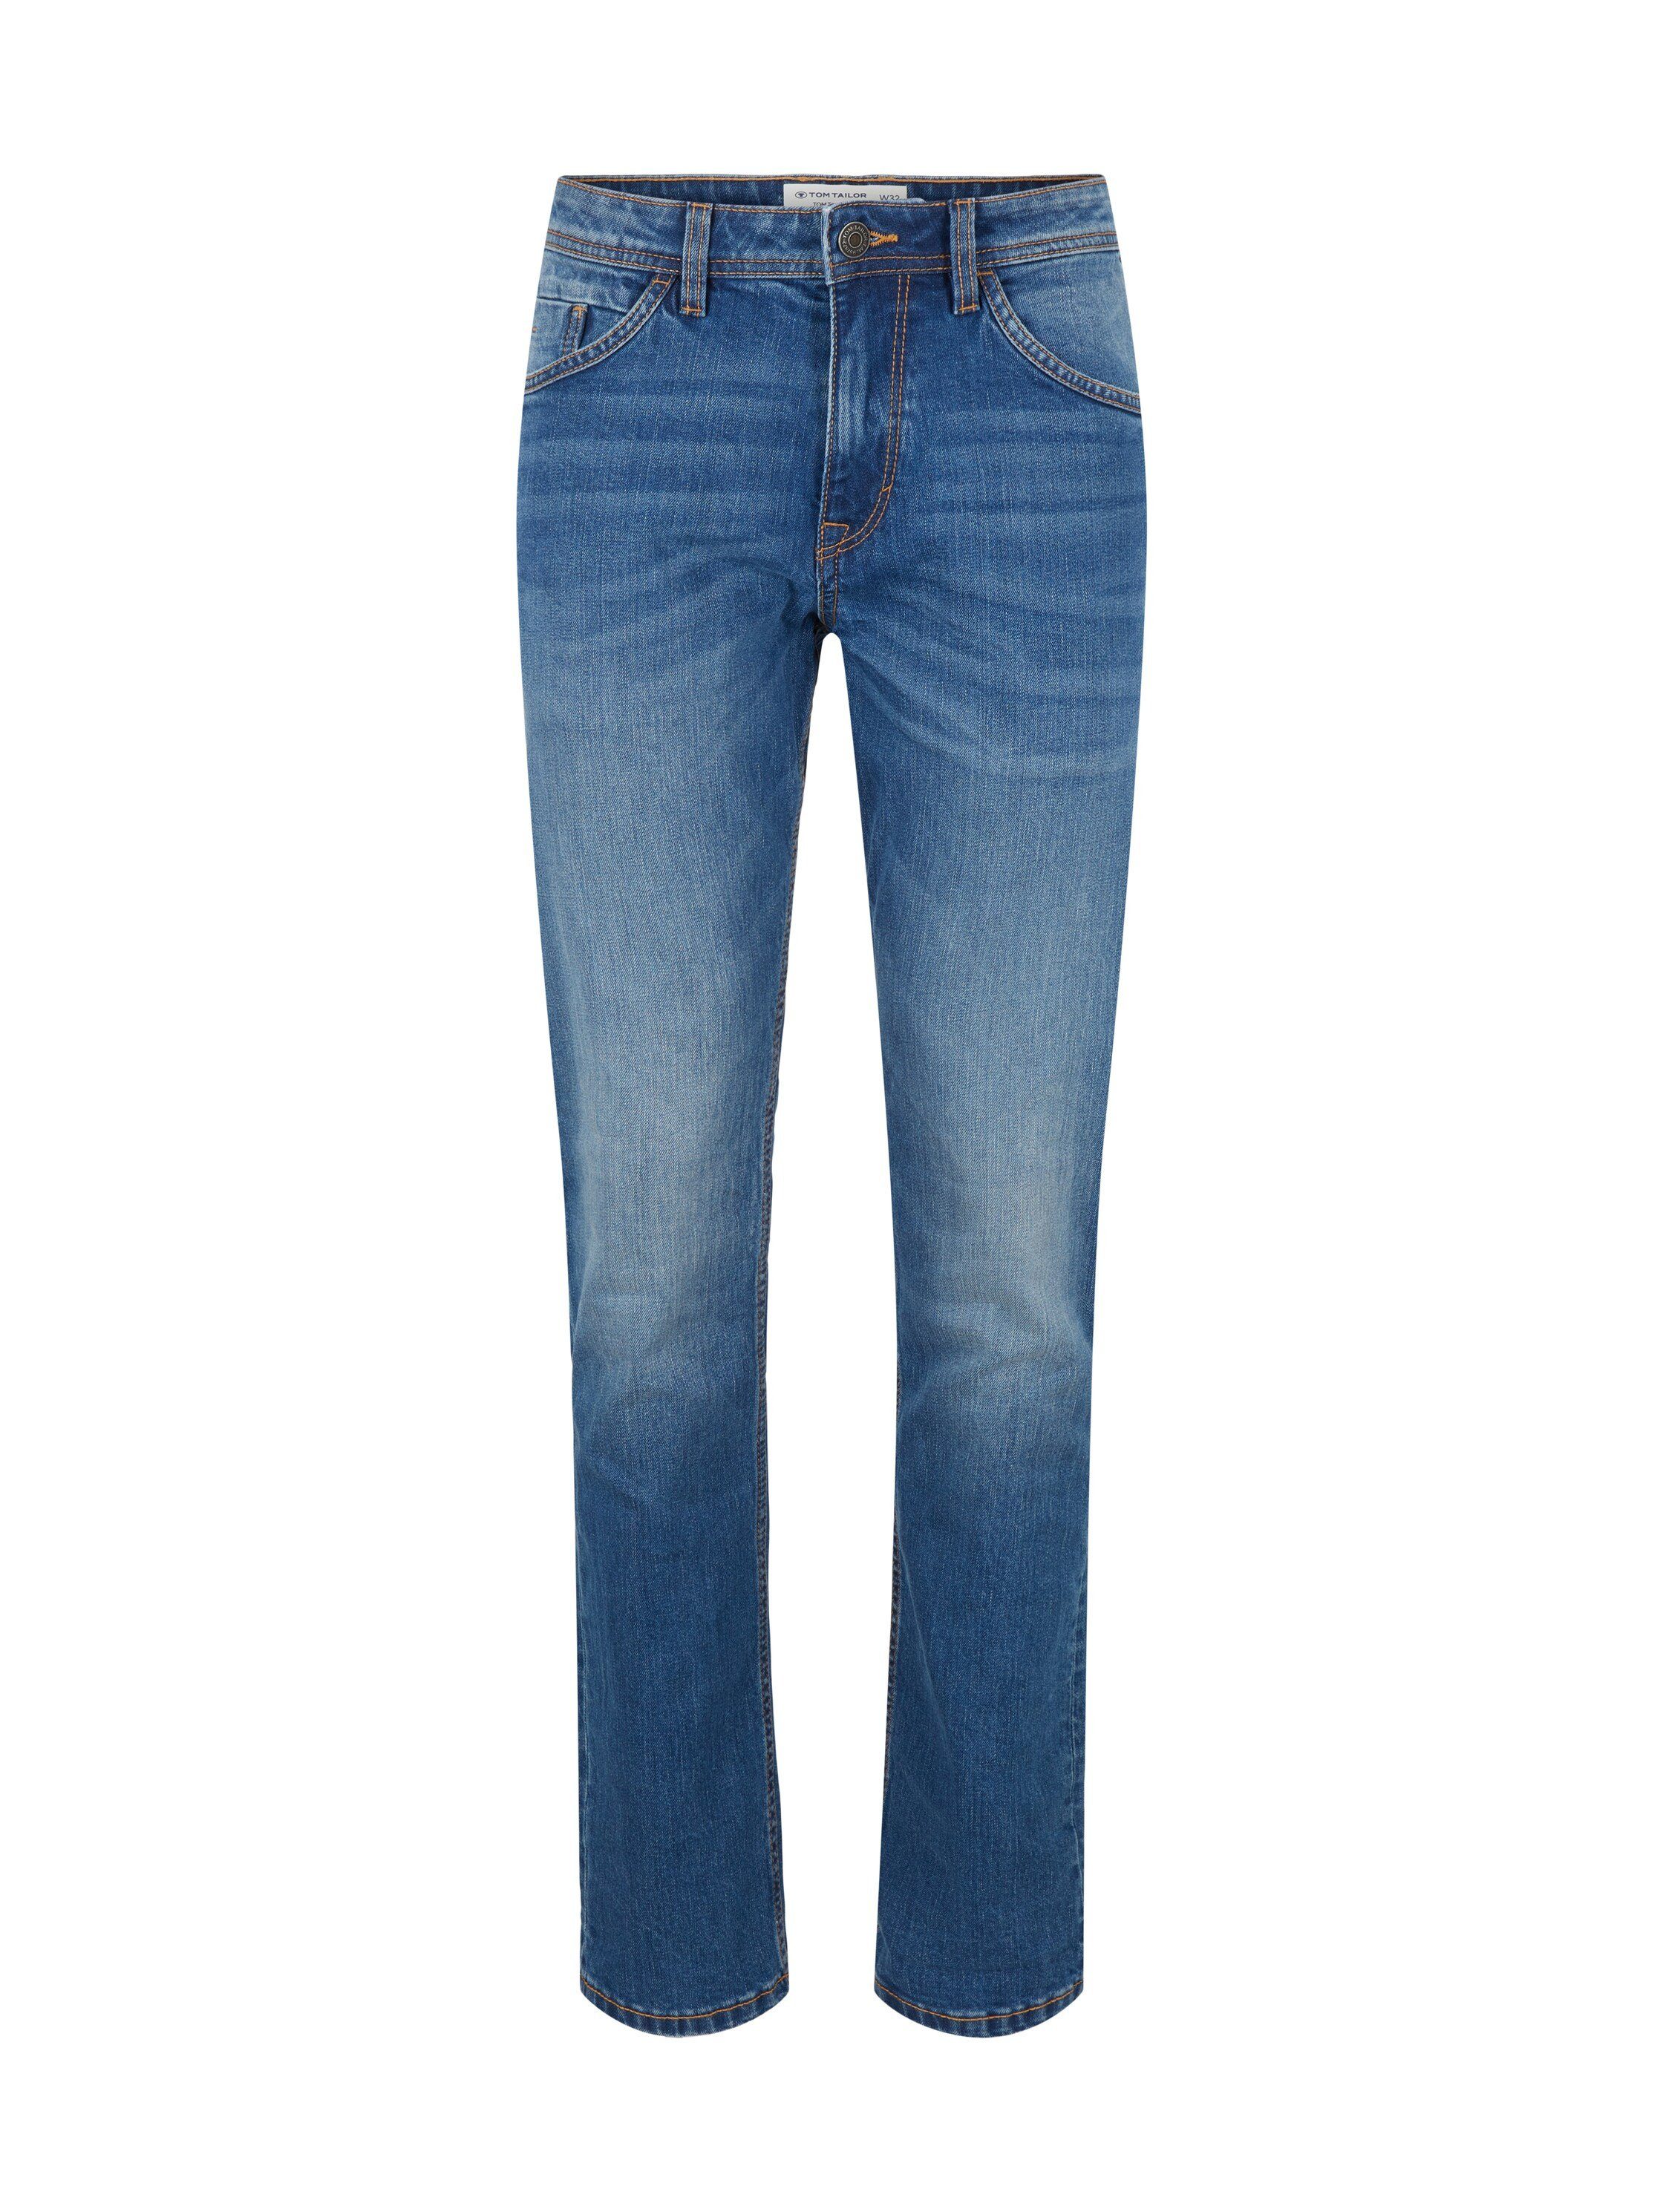 TOM TAILOR Slim-fit-Jeans Slim-Fit Jeans used mid stone blue denim